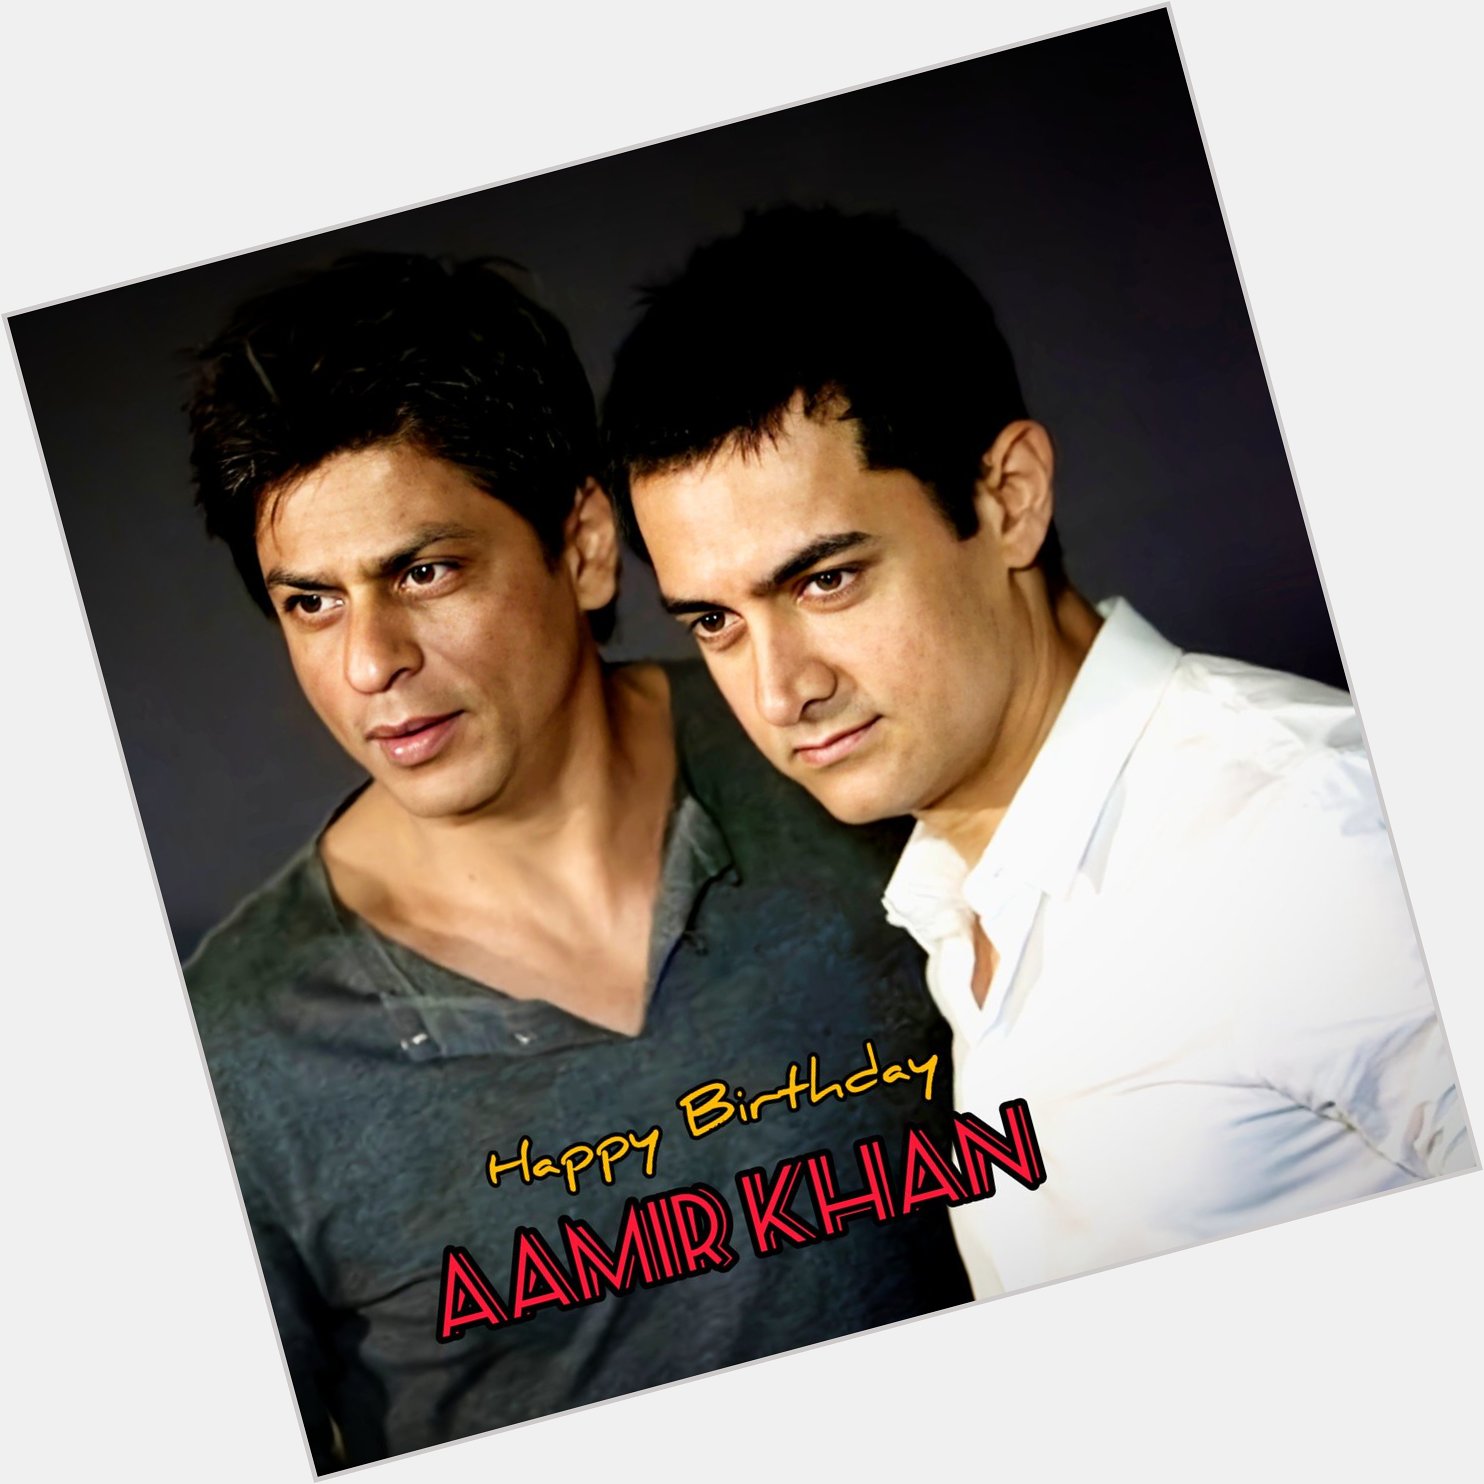 Join us in wishing Aamir Khan a very Happy Birthday.  